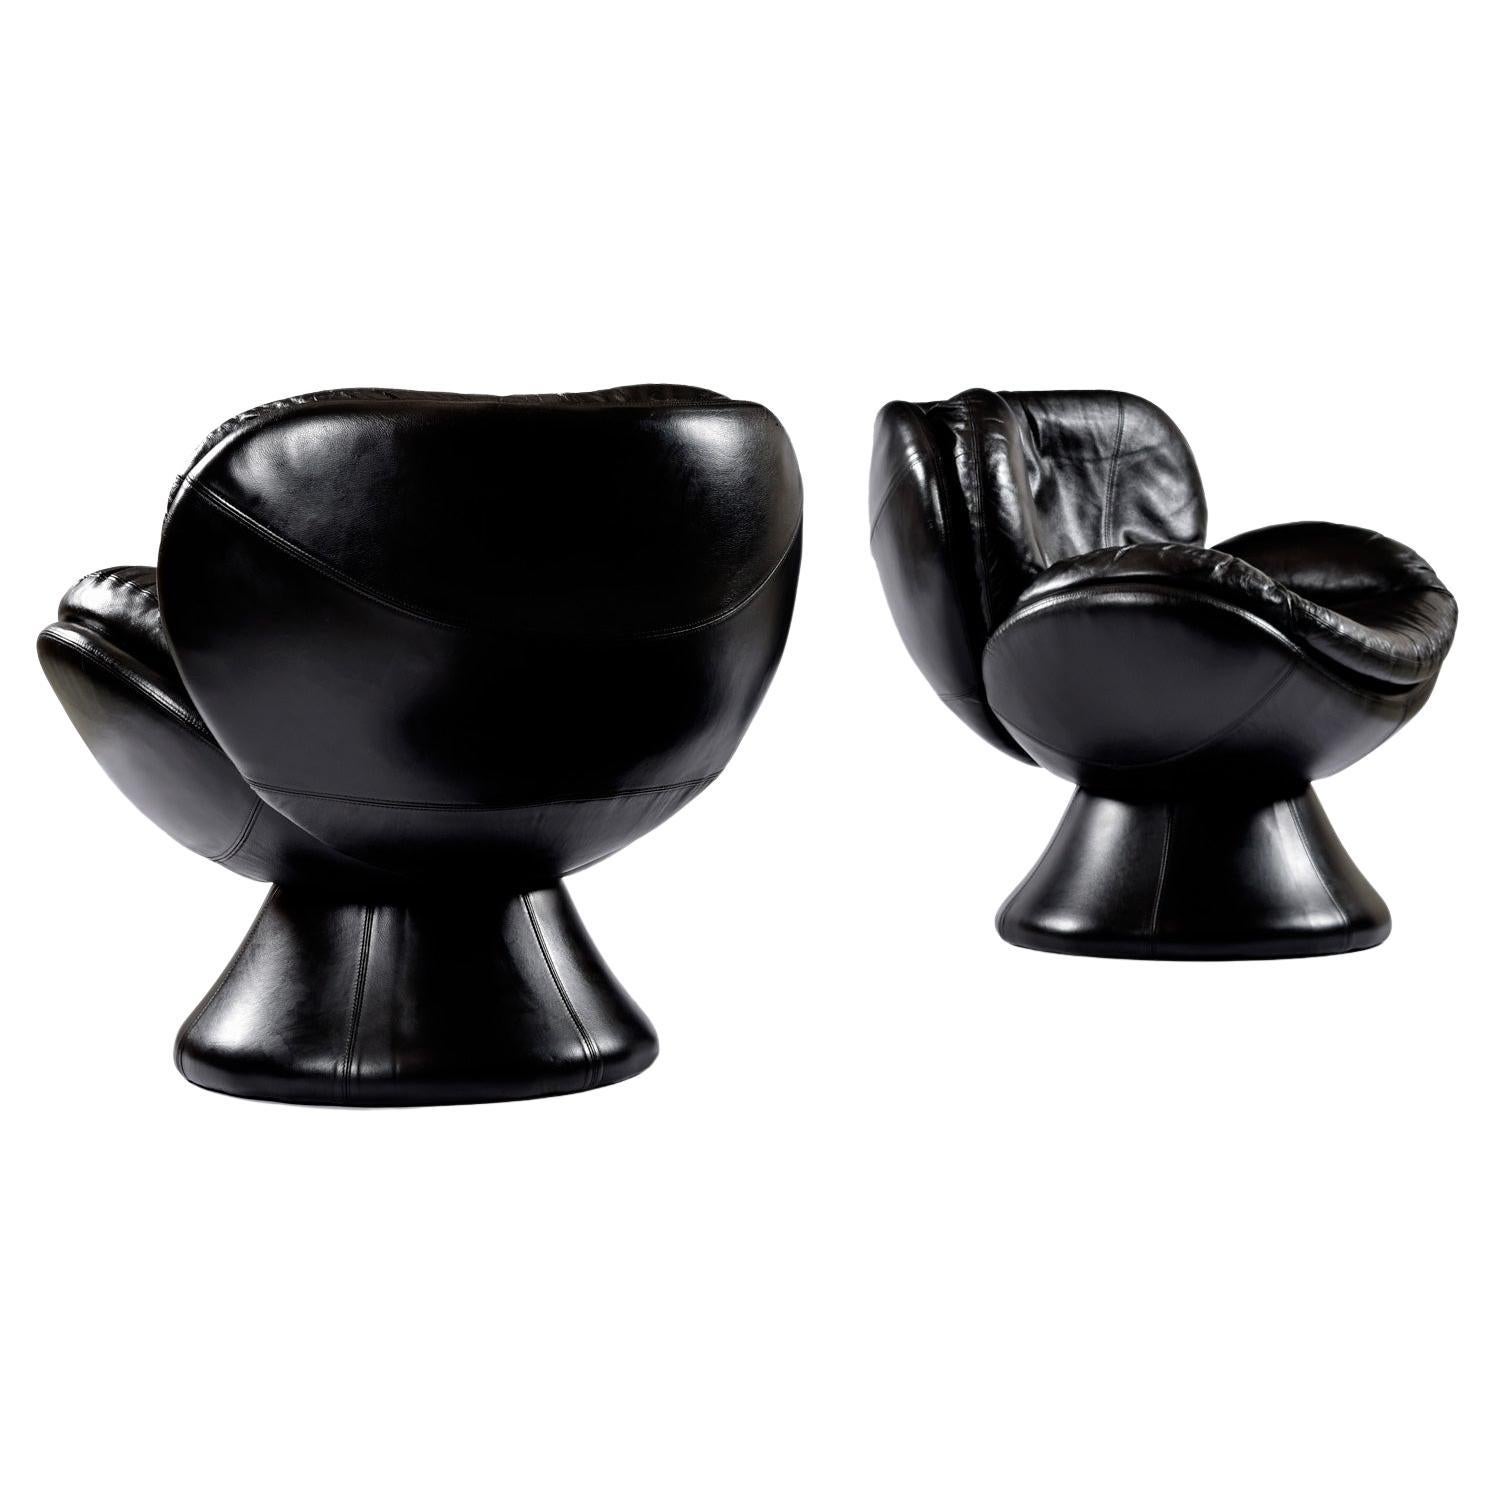  The Modernity Pedestal Base Black Leather Swivel Pod Chairs by Jaymar of Canada (en anglais seulement) en vente